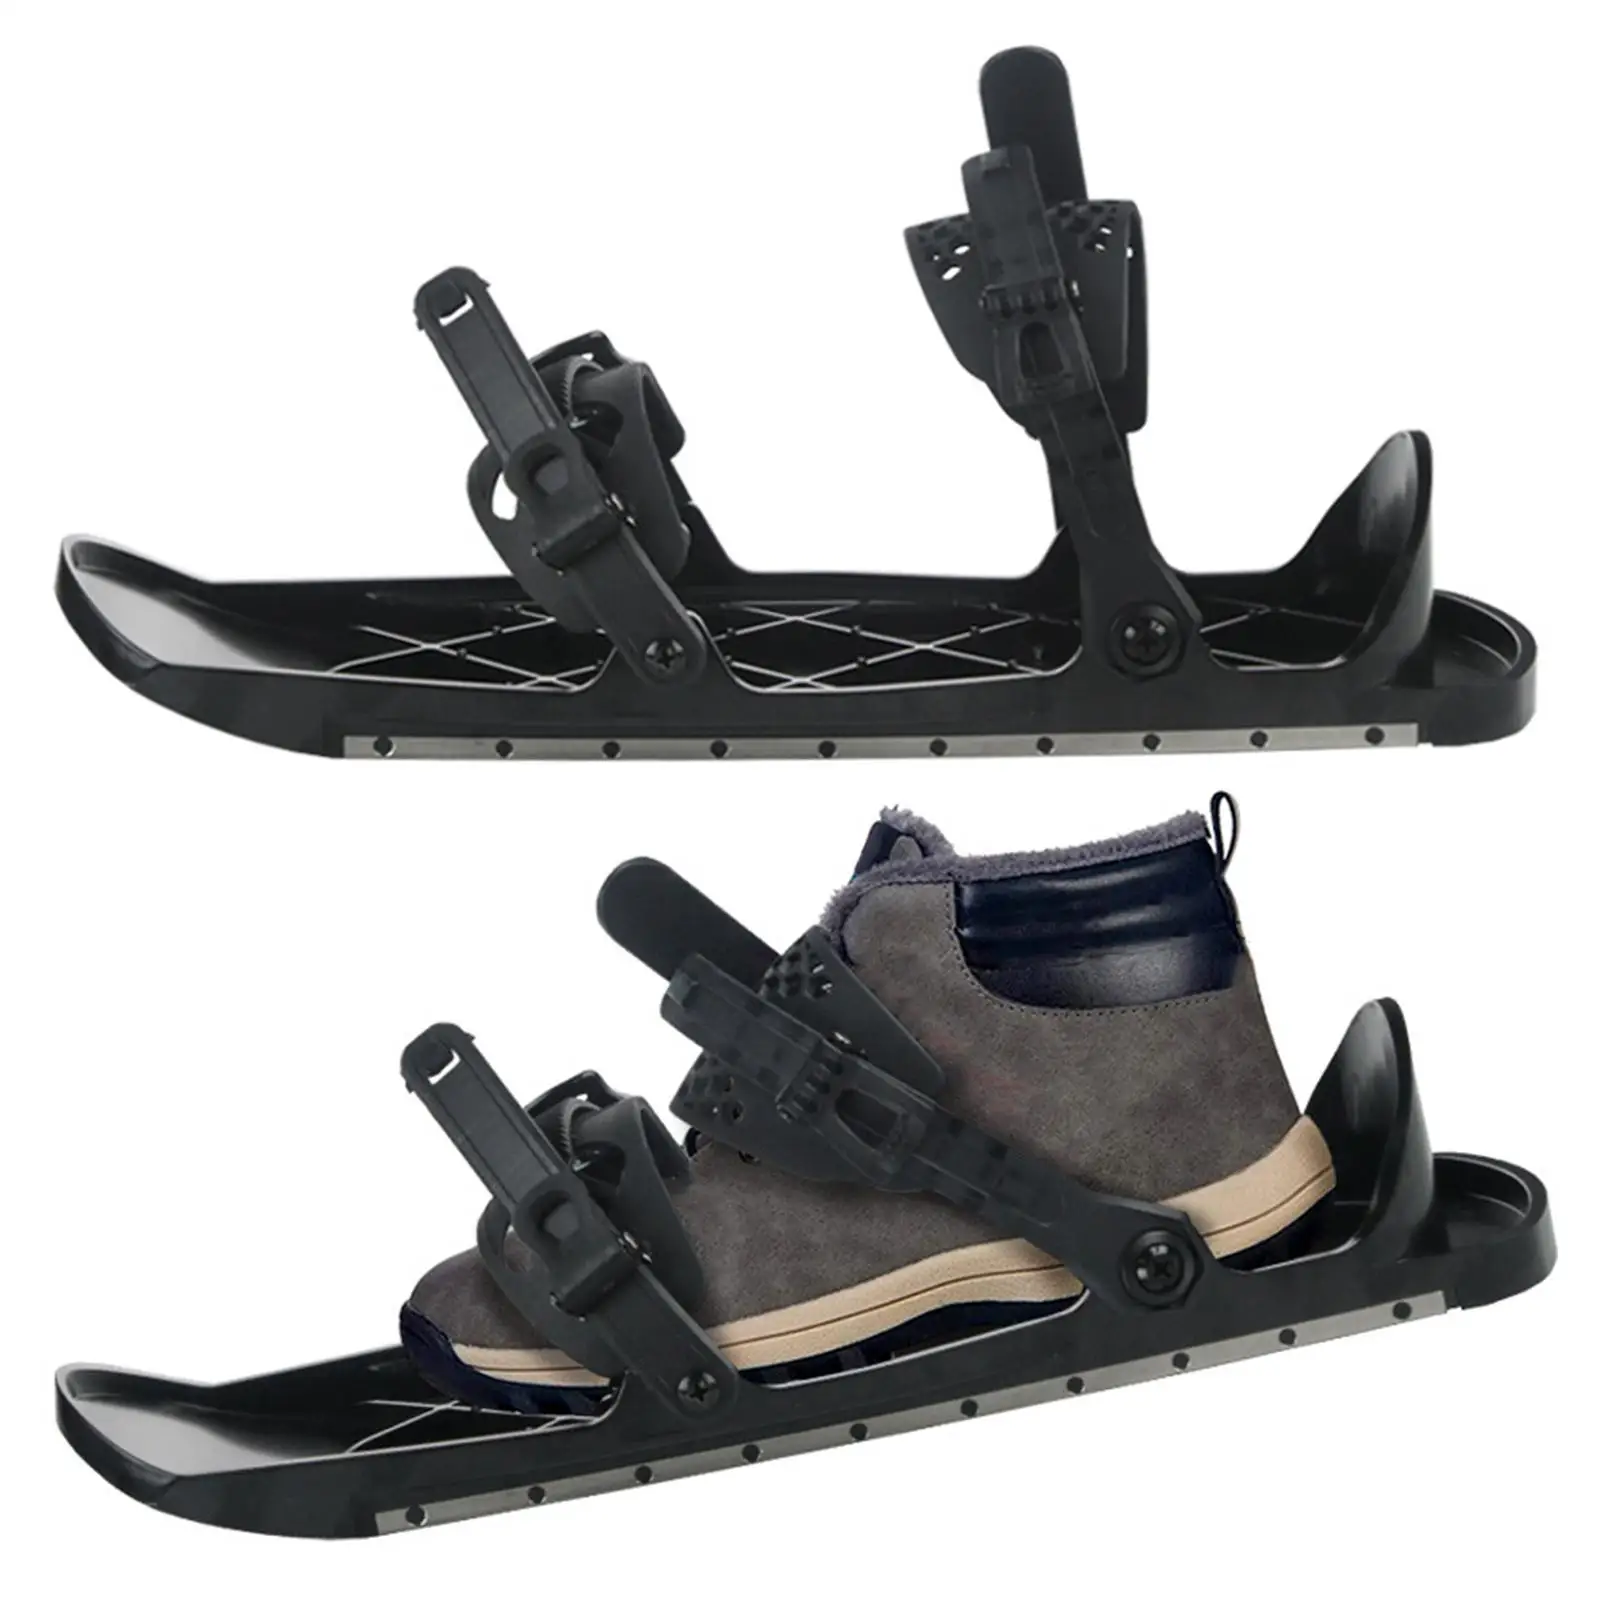 Multifunction Snowblades Skis Shoes Adjustable Ski Boots for Hiking Trails